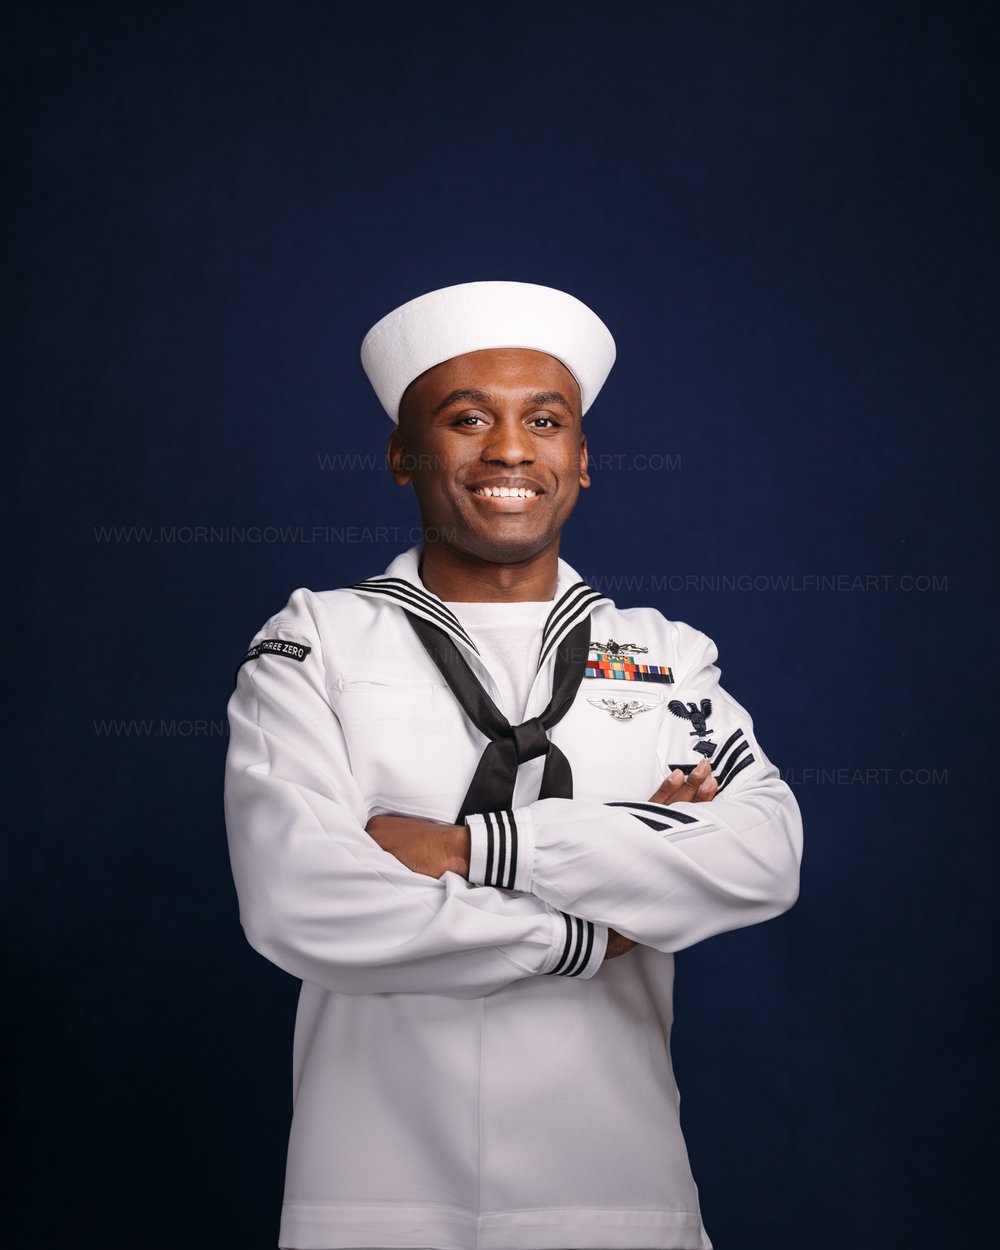 20230930-Navy graduation portrait-007.jpg